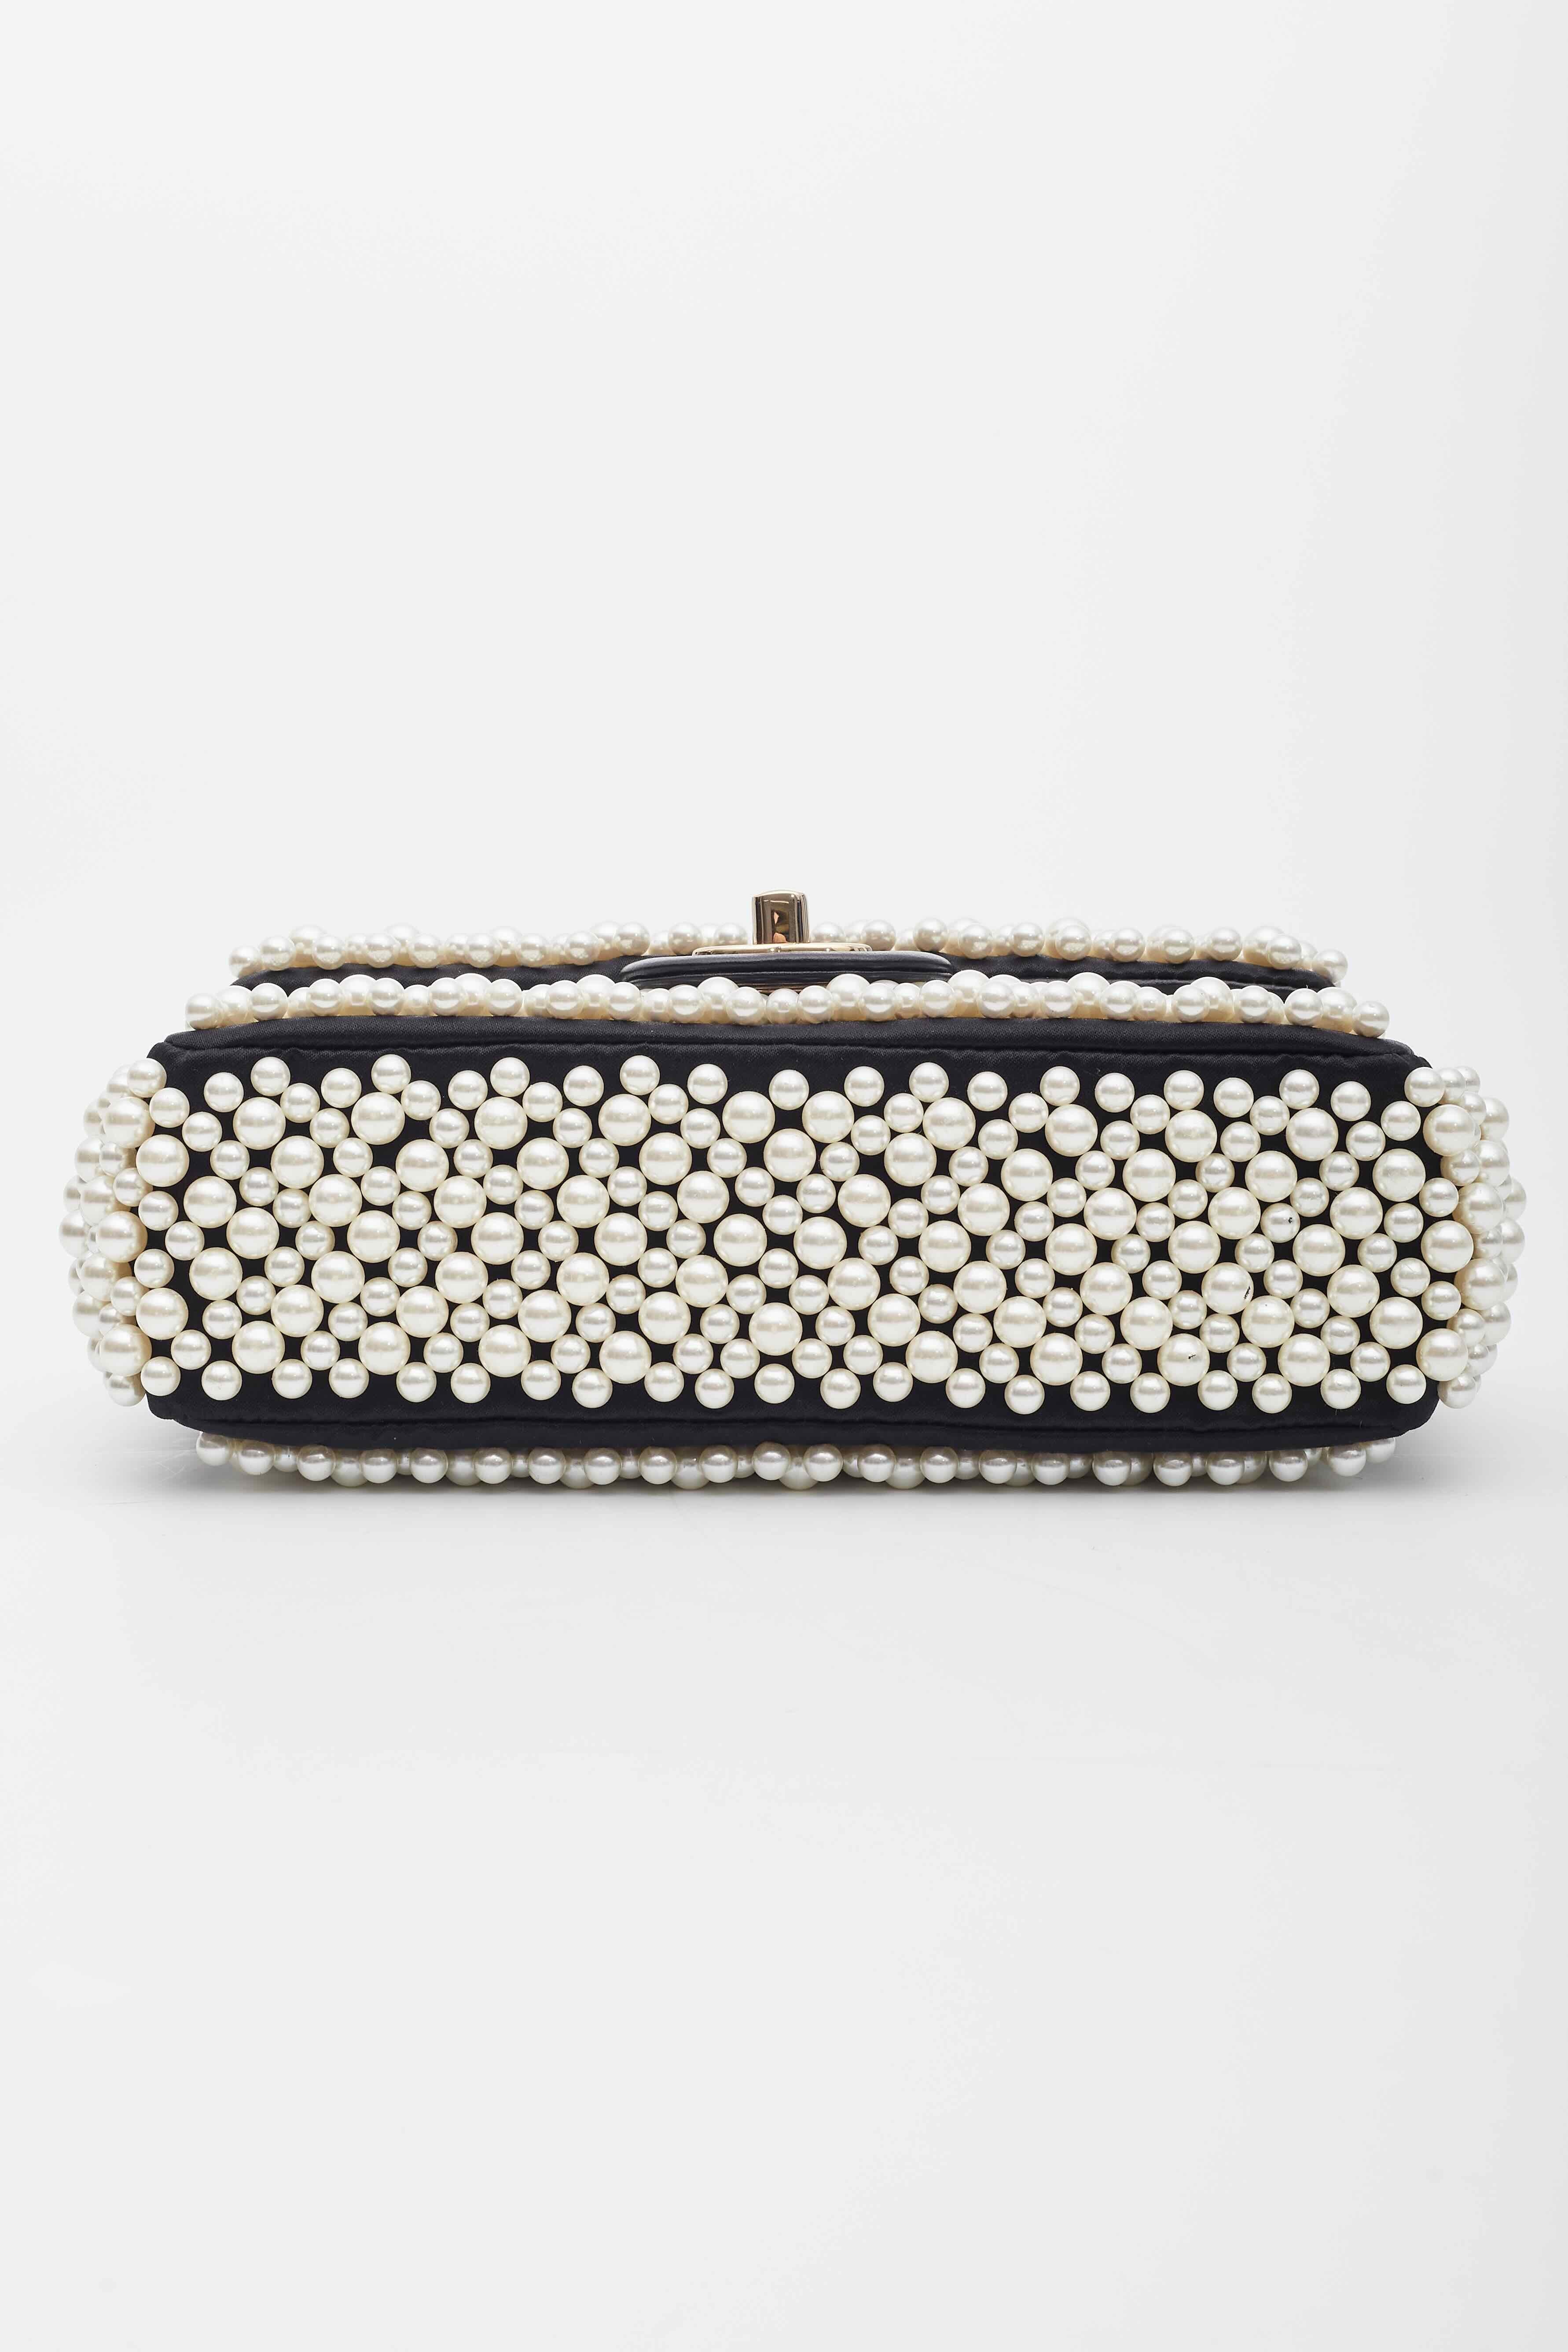 Chanel Black Lambskin Pearl on Flap Bag For Sale 1